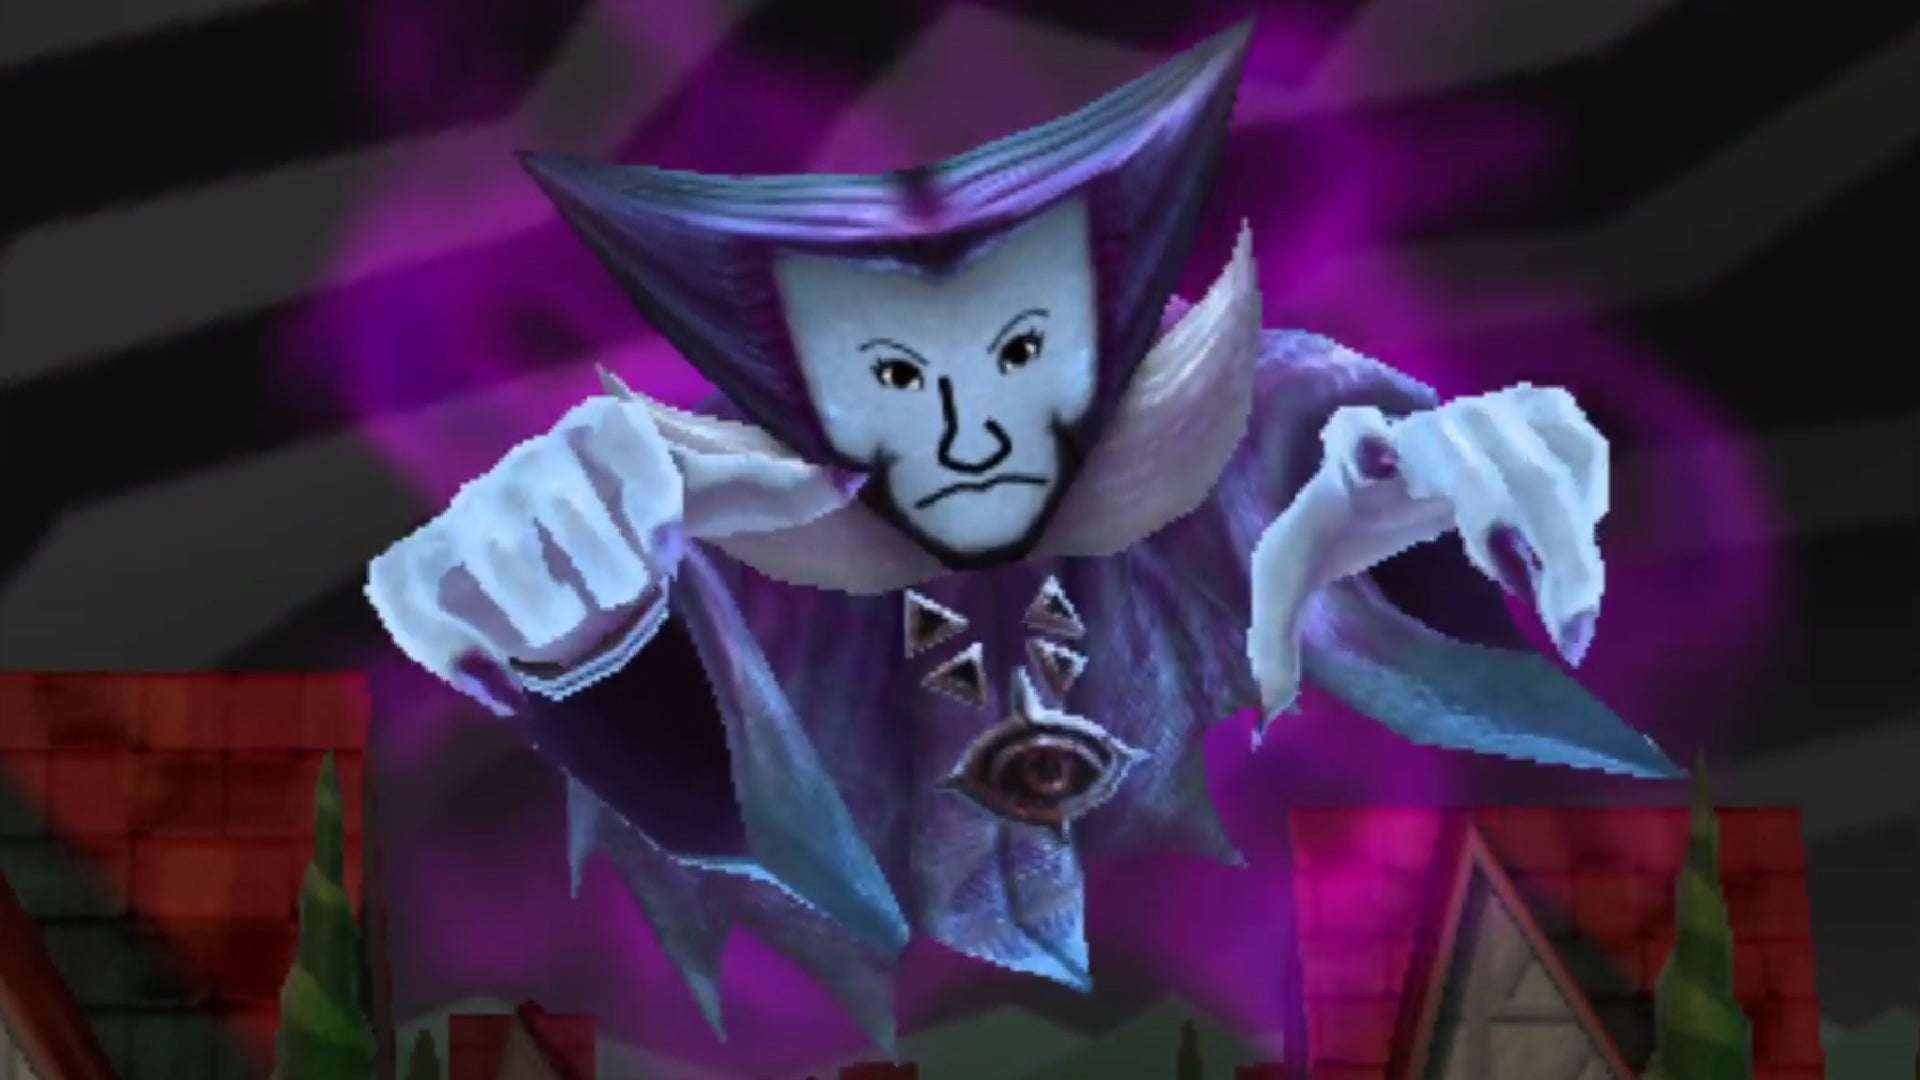 Miitopia game screenshot featuring the Dark Lord character.